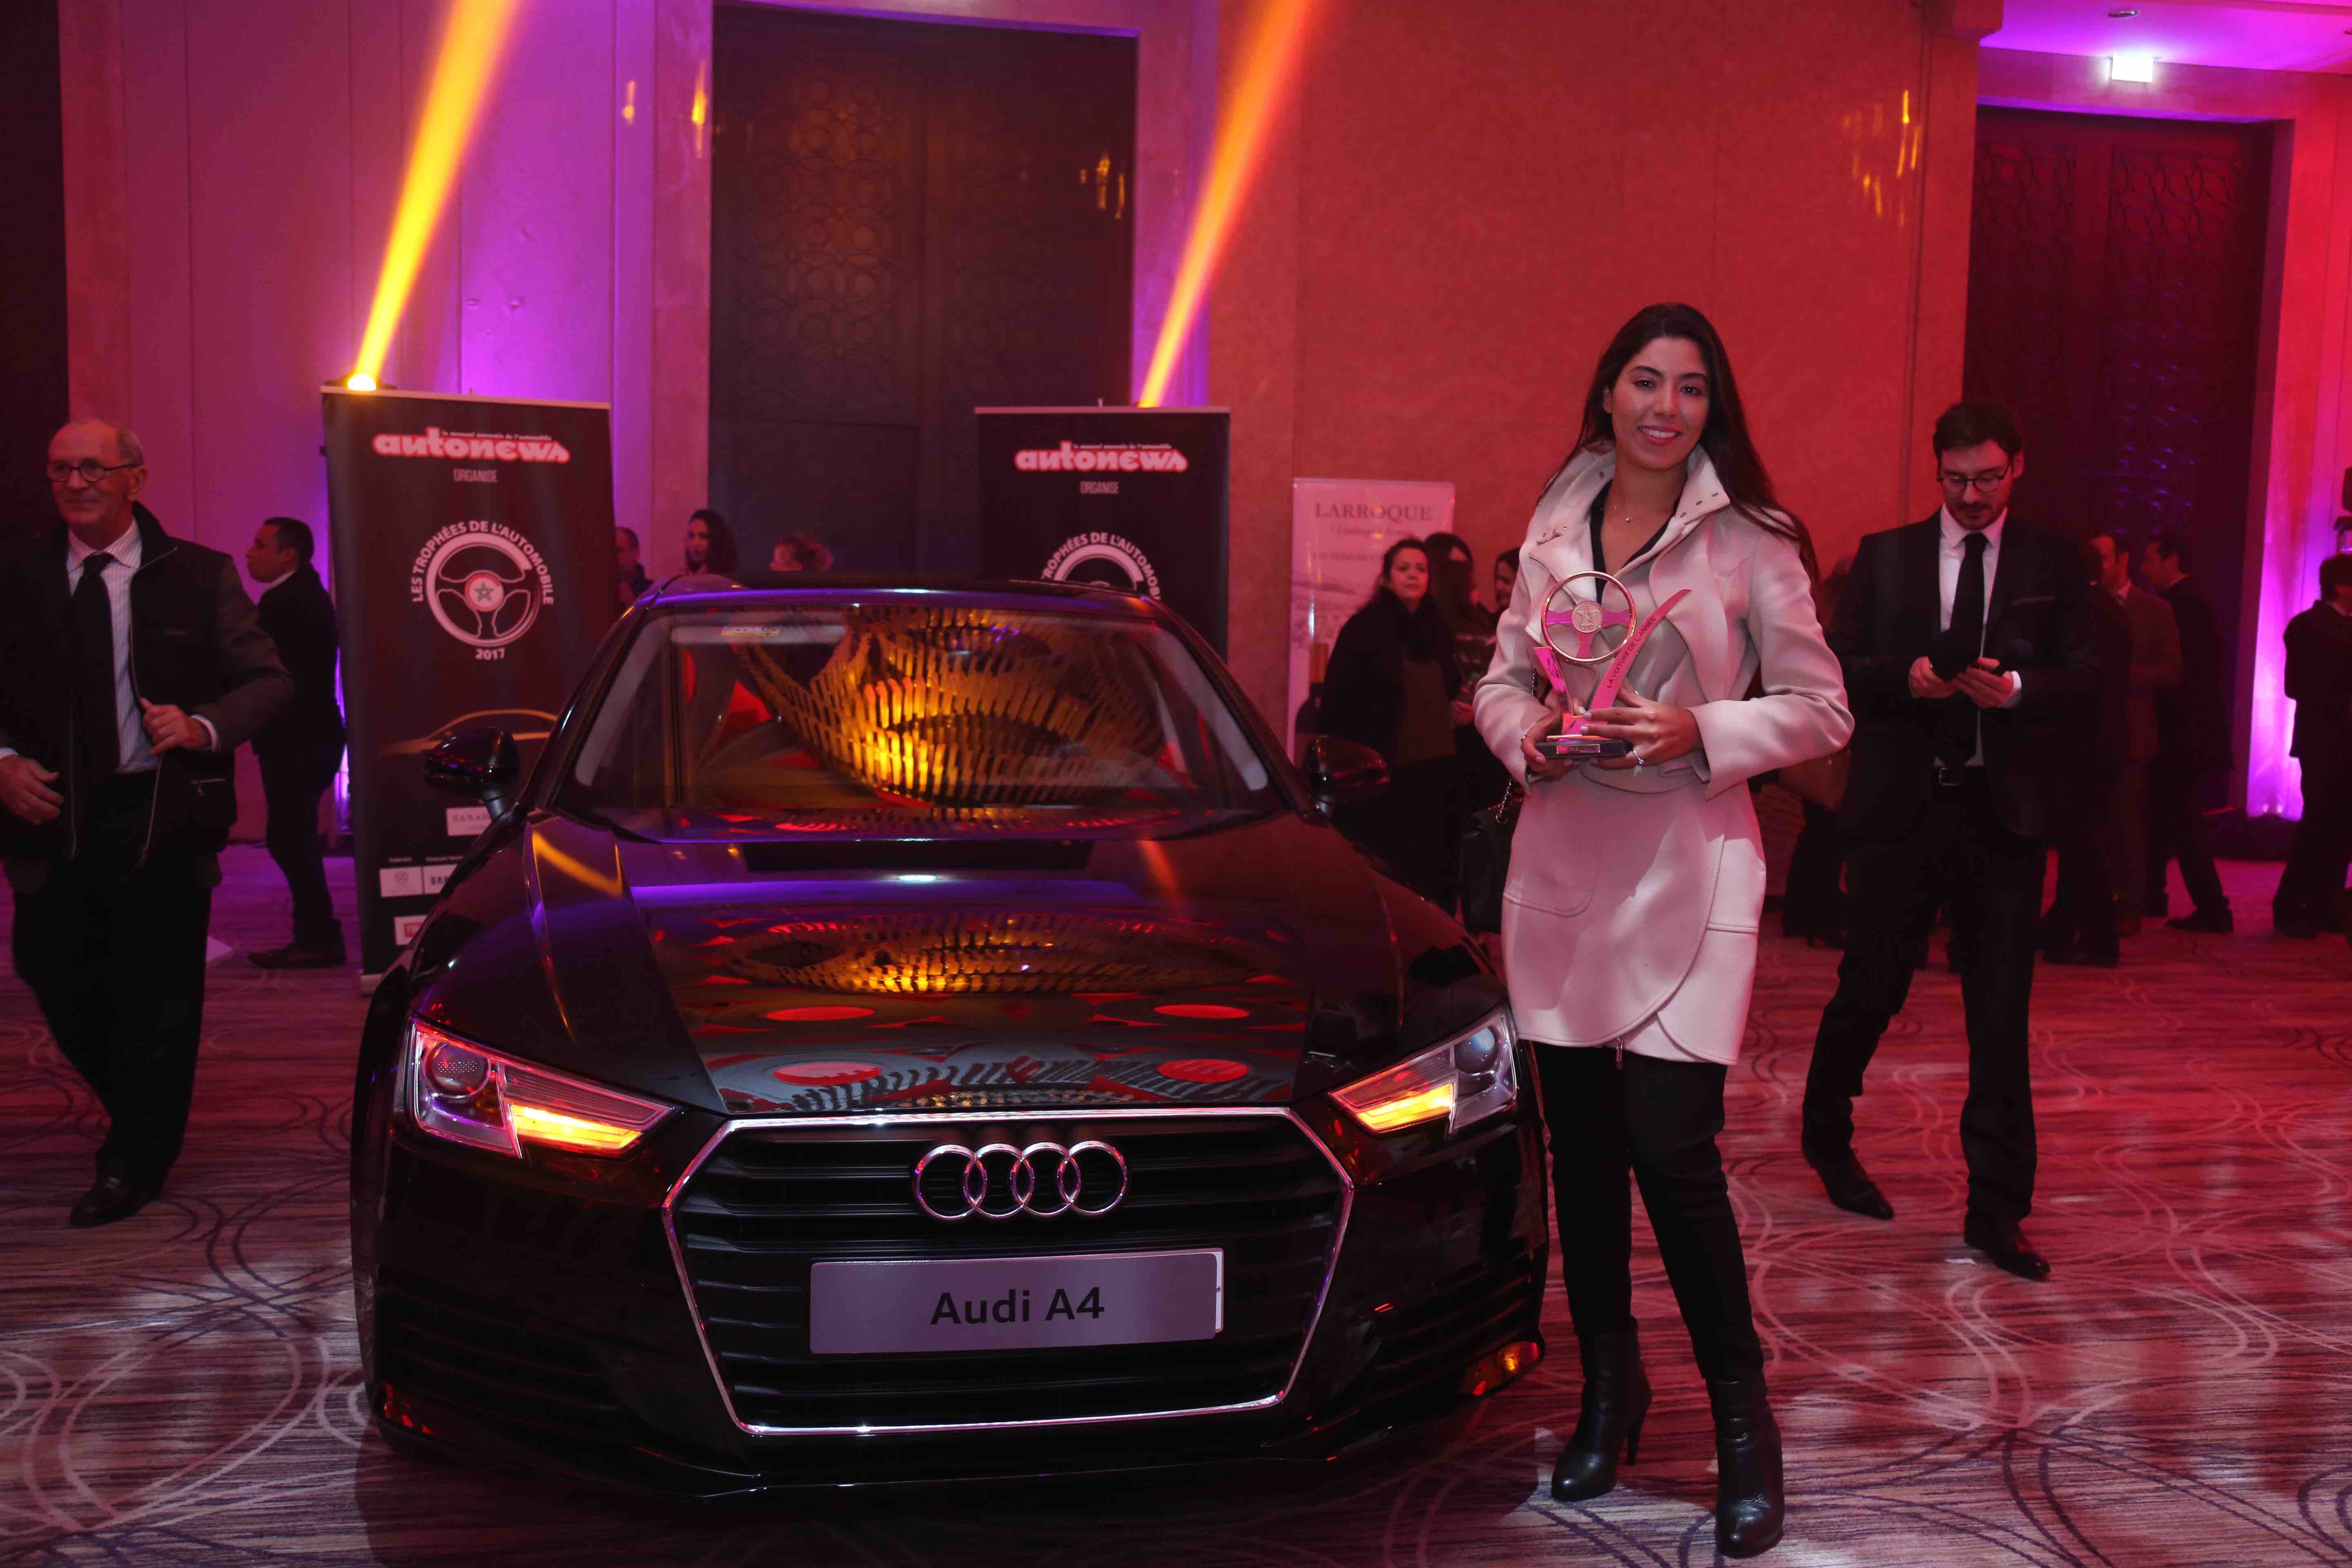 Audi driving experience : Les SUV Audi en mode baroudeur